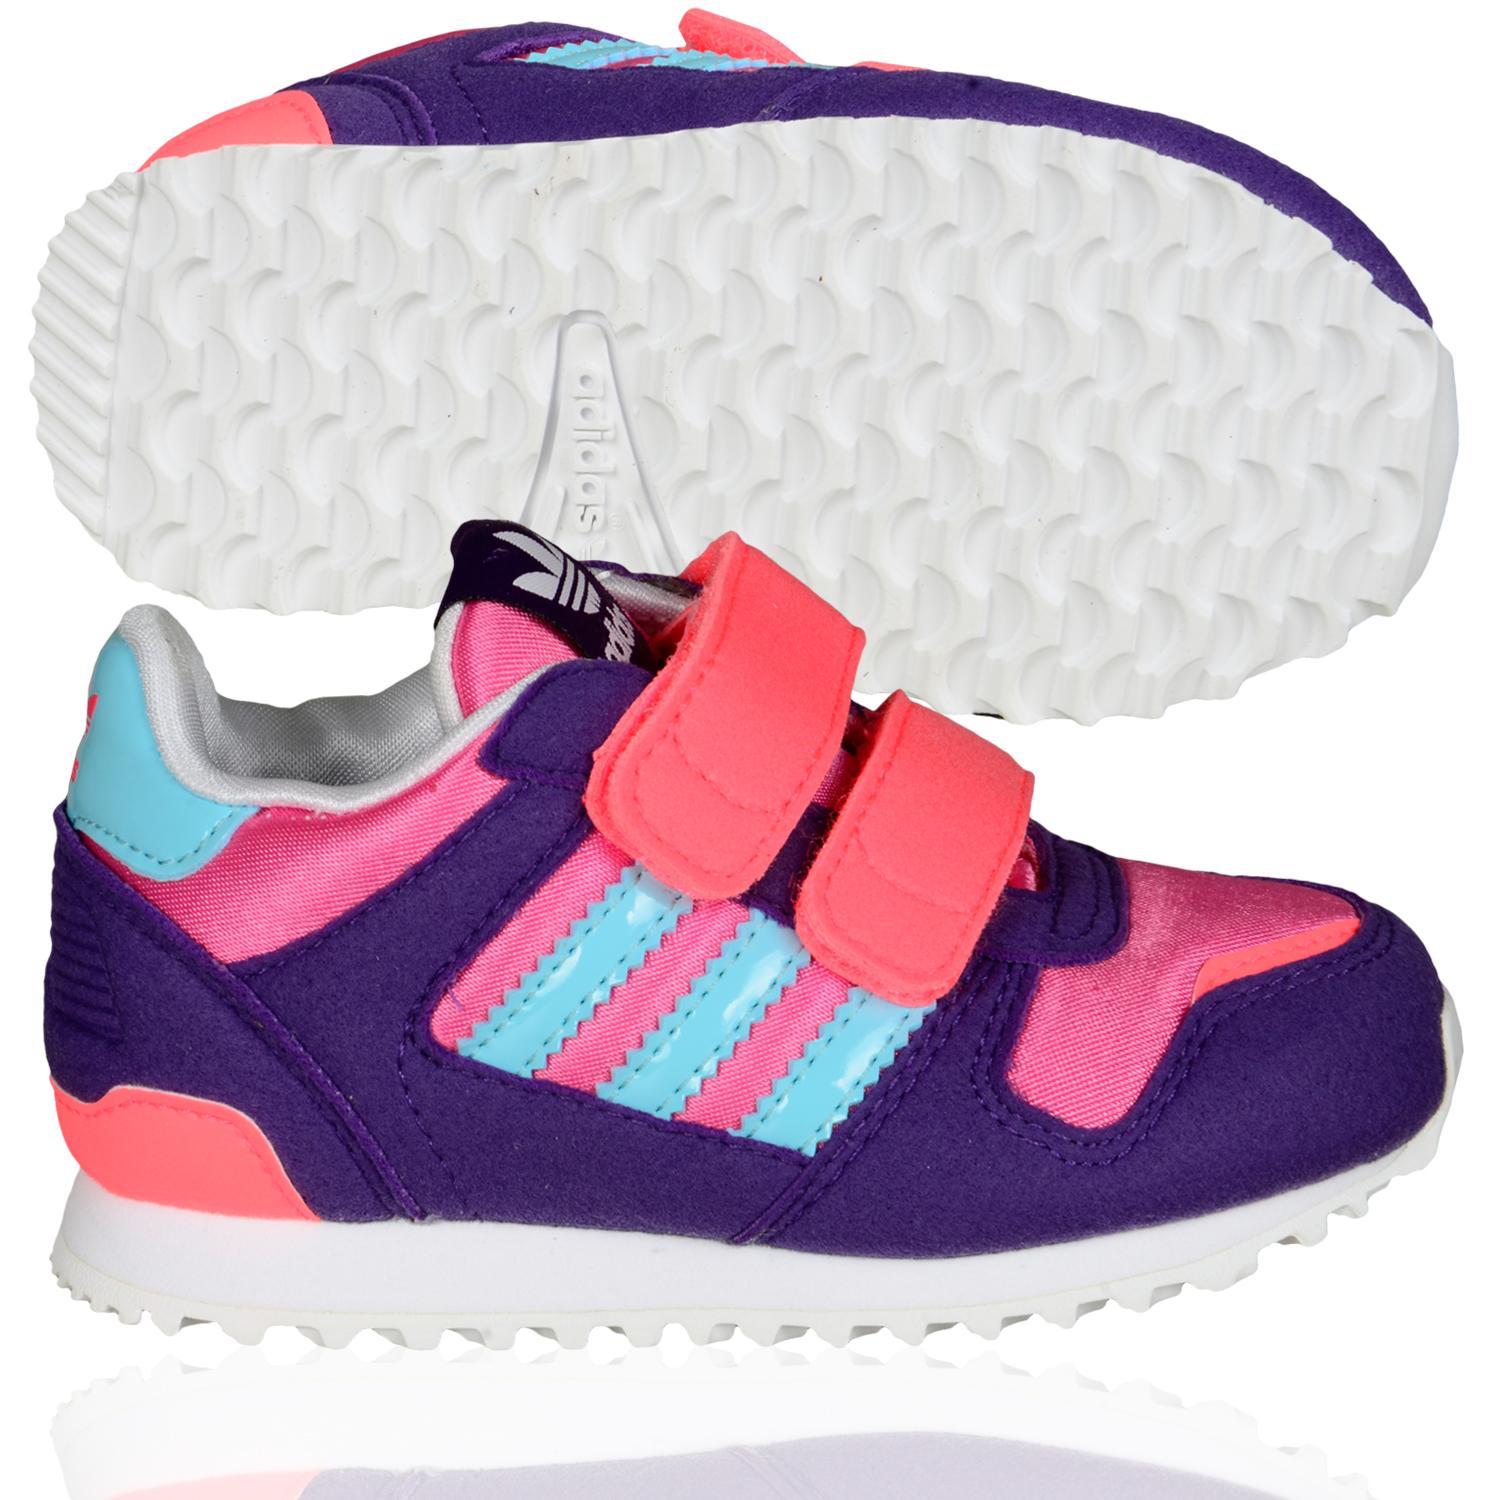 Foto Adidas Shoe Kids Zx 700 Cf 1 La Zapatilla De Deporte Bajo Púrpura M... foto 50734